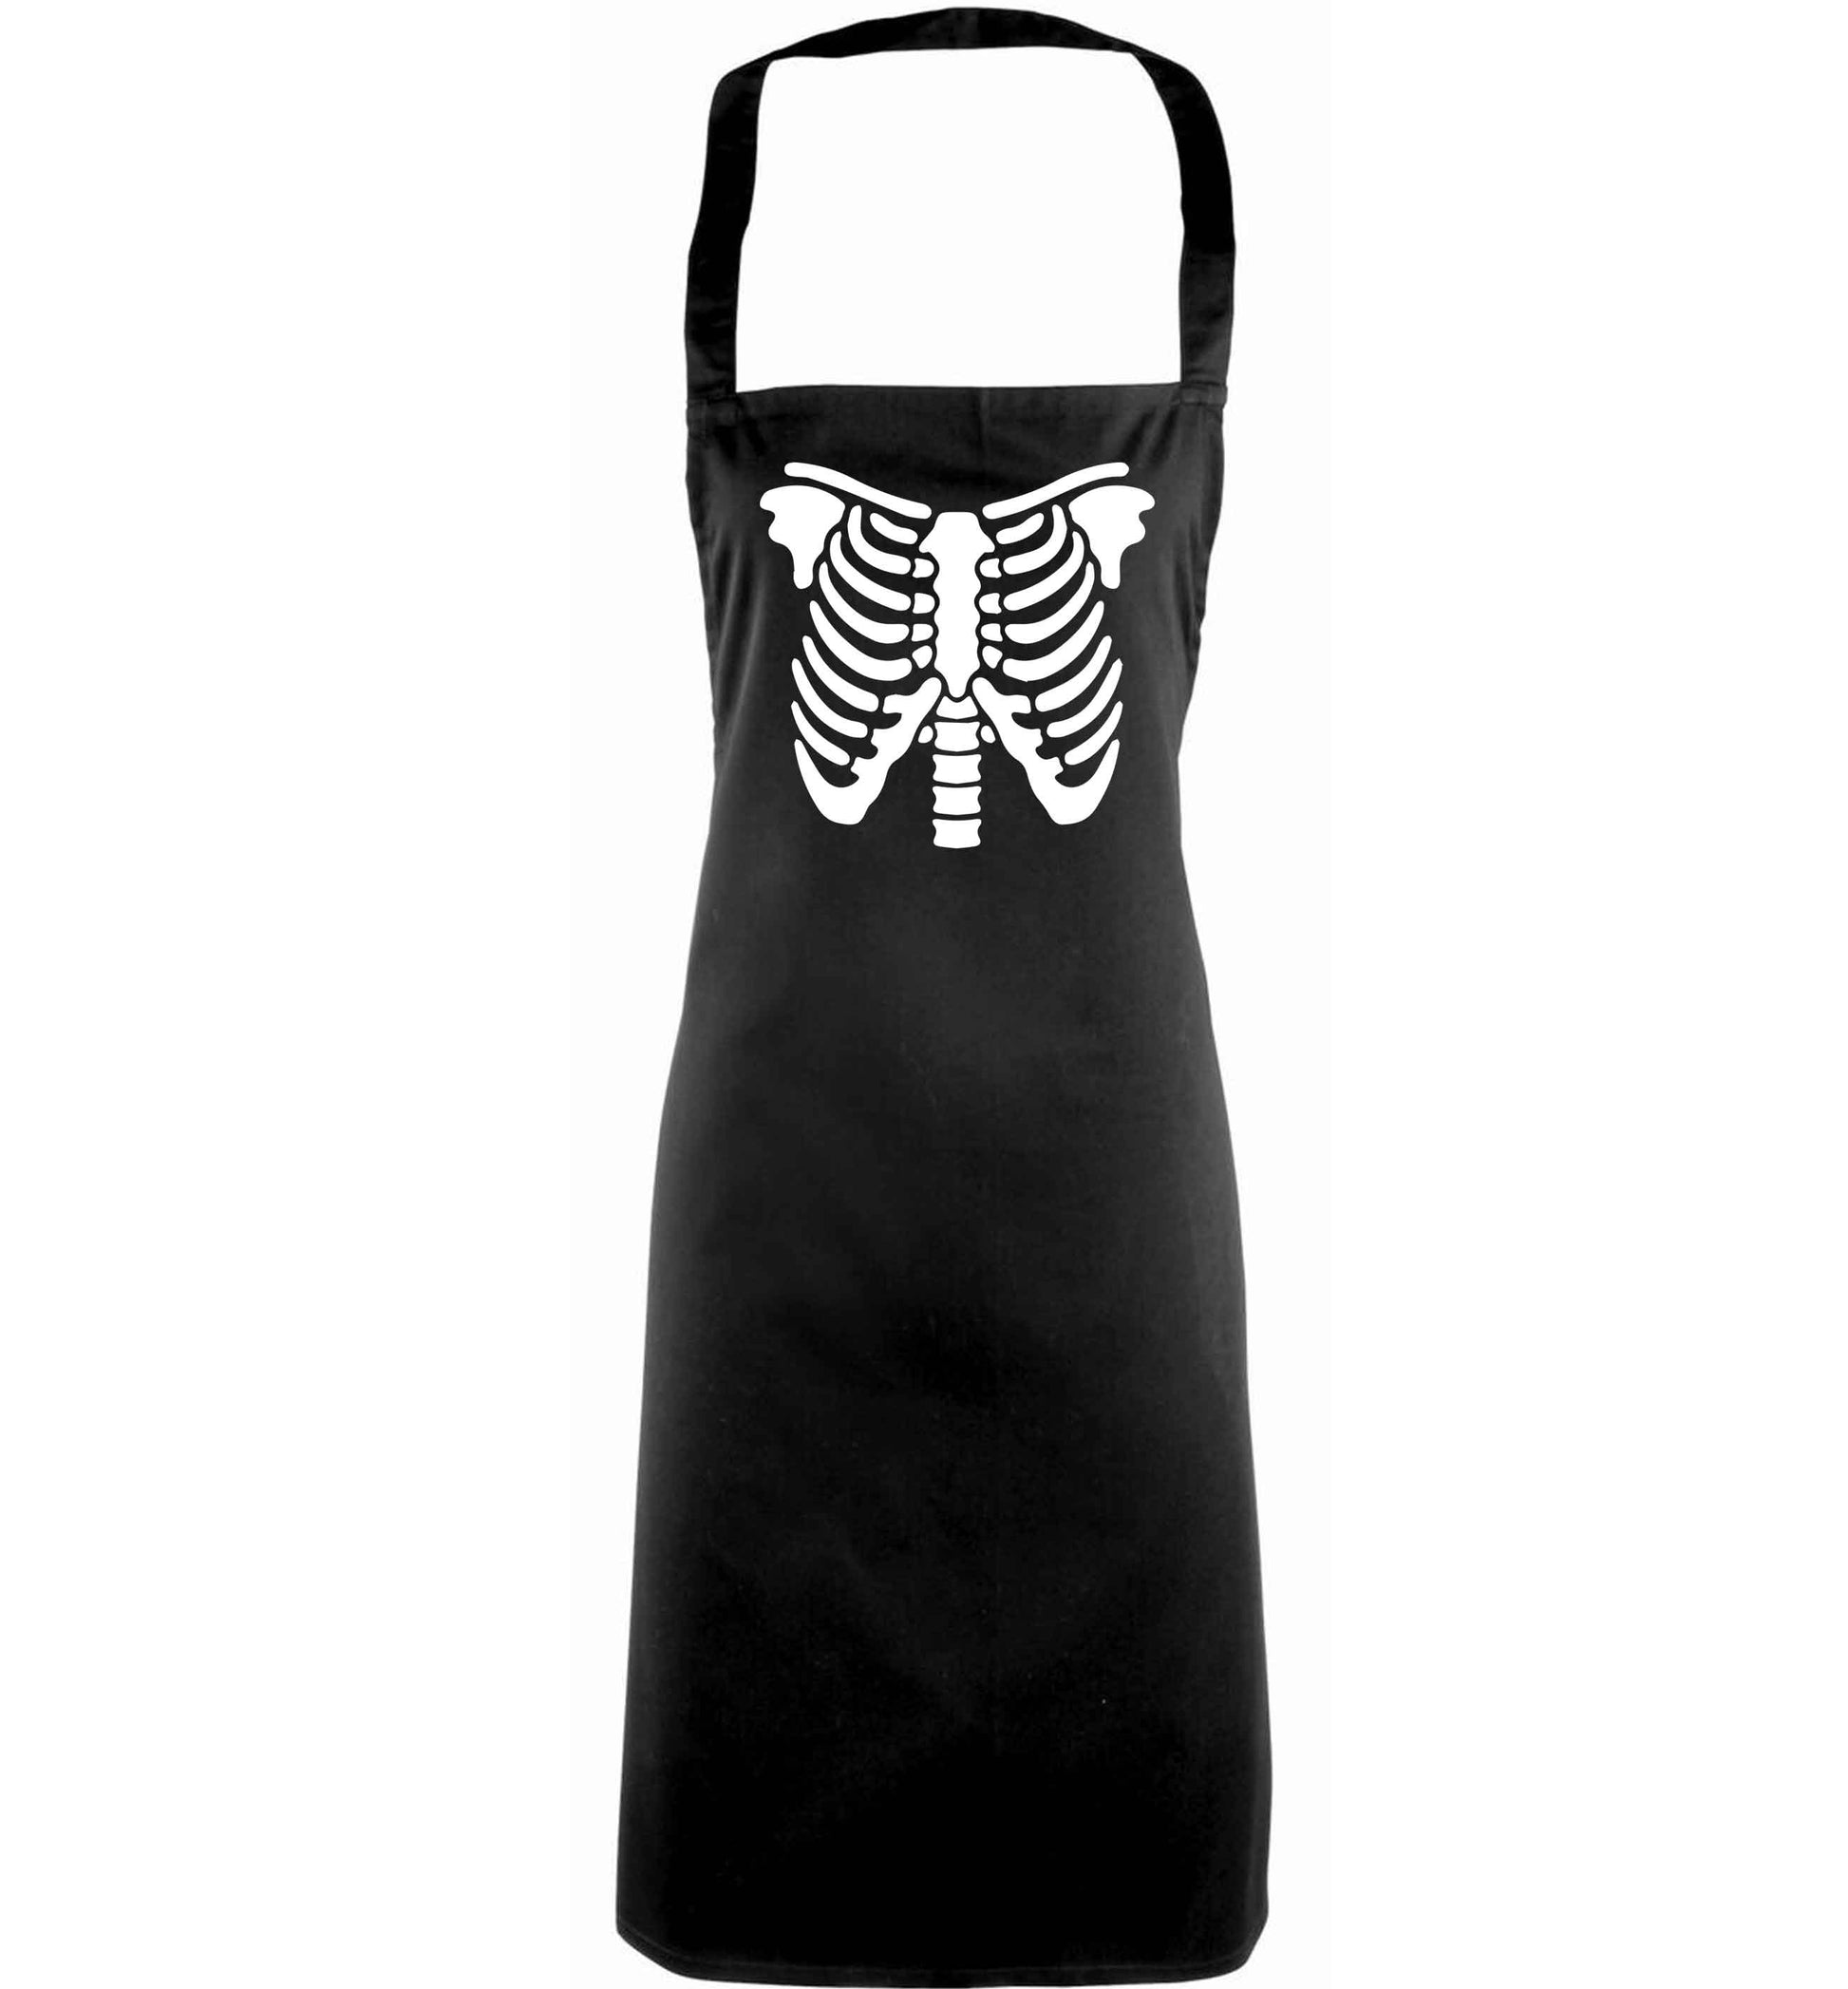 Skeleton ribcage adults black apron